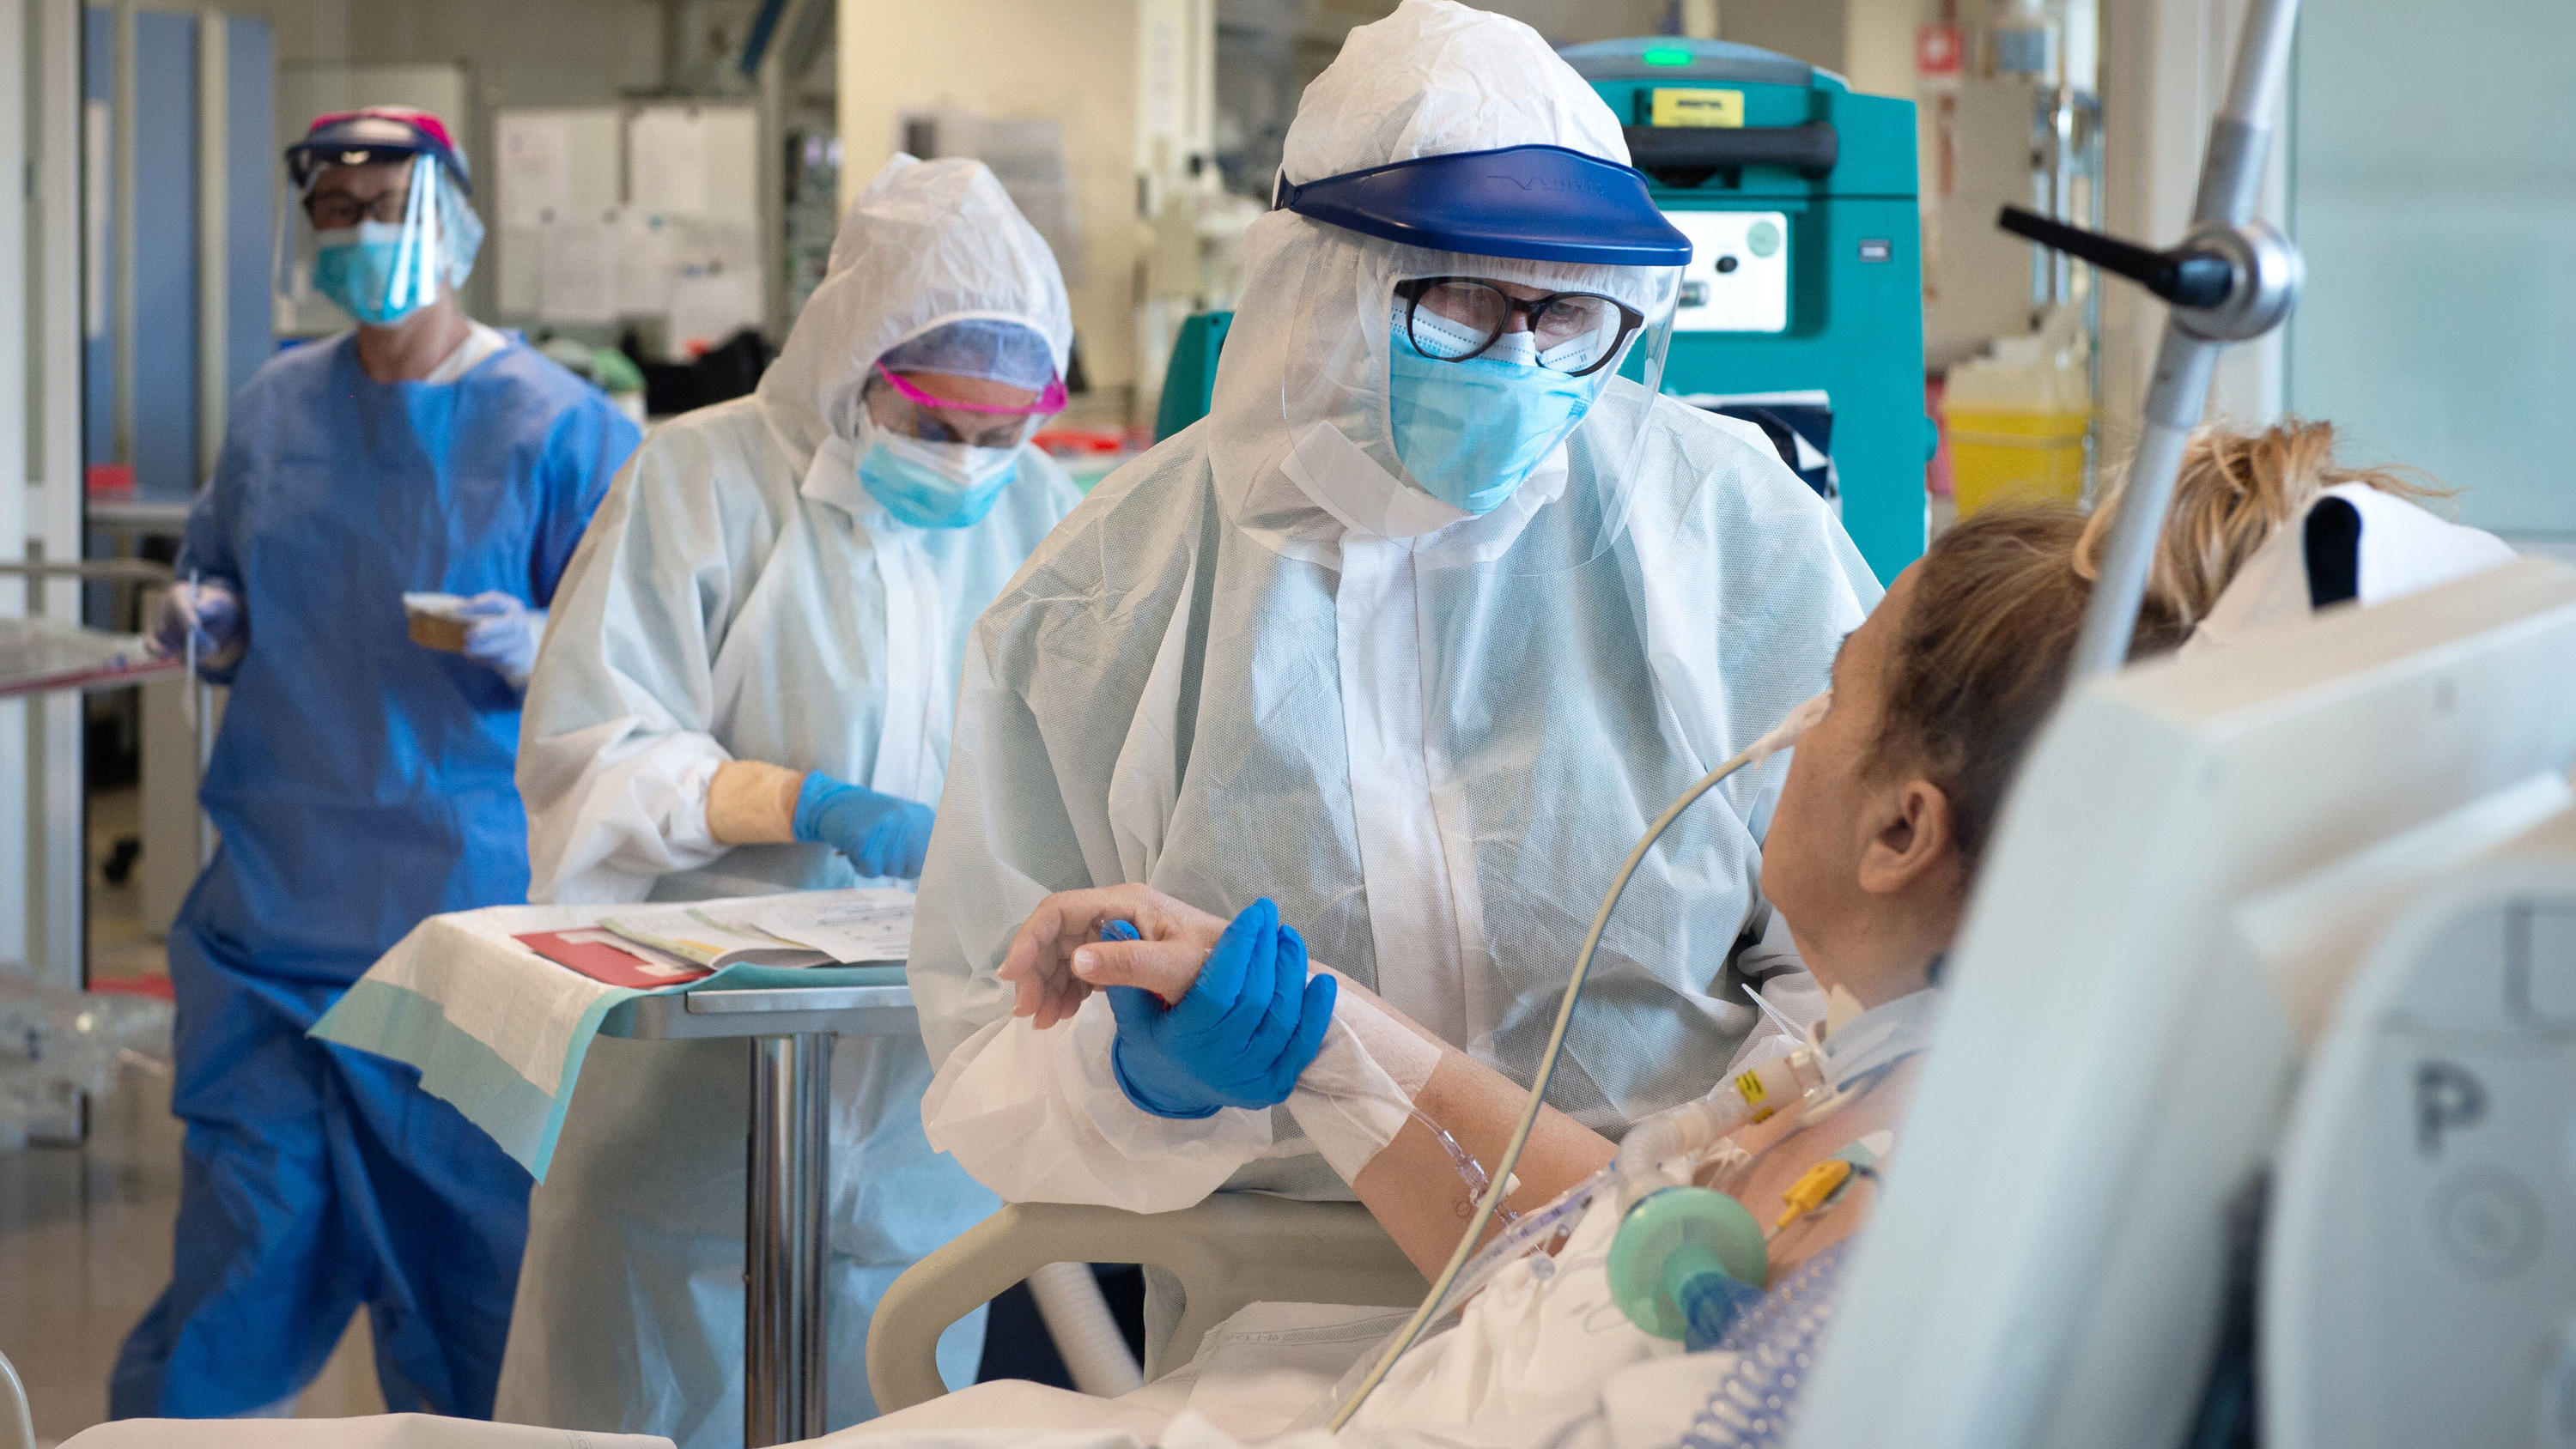 dpatopbilder - 08.04.2020, Italien, Bologna: Gesundheitspersonal versorgt Coronavirus-Patienten auf einer Intensivstation im Sant'Orsola Malpighi Krankenhaus. Foto: Massimo Paolone/LaPresse via ZUMA Press/dpa +++ dpa-Bildfunk +++